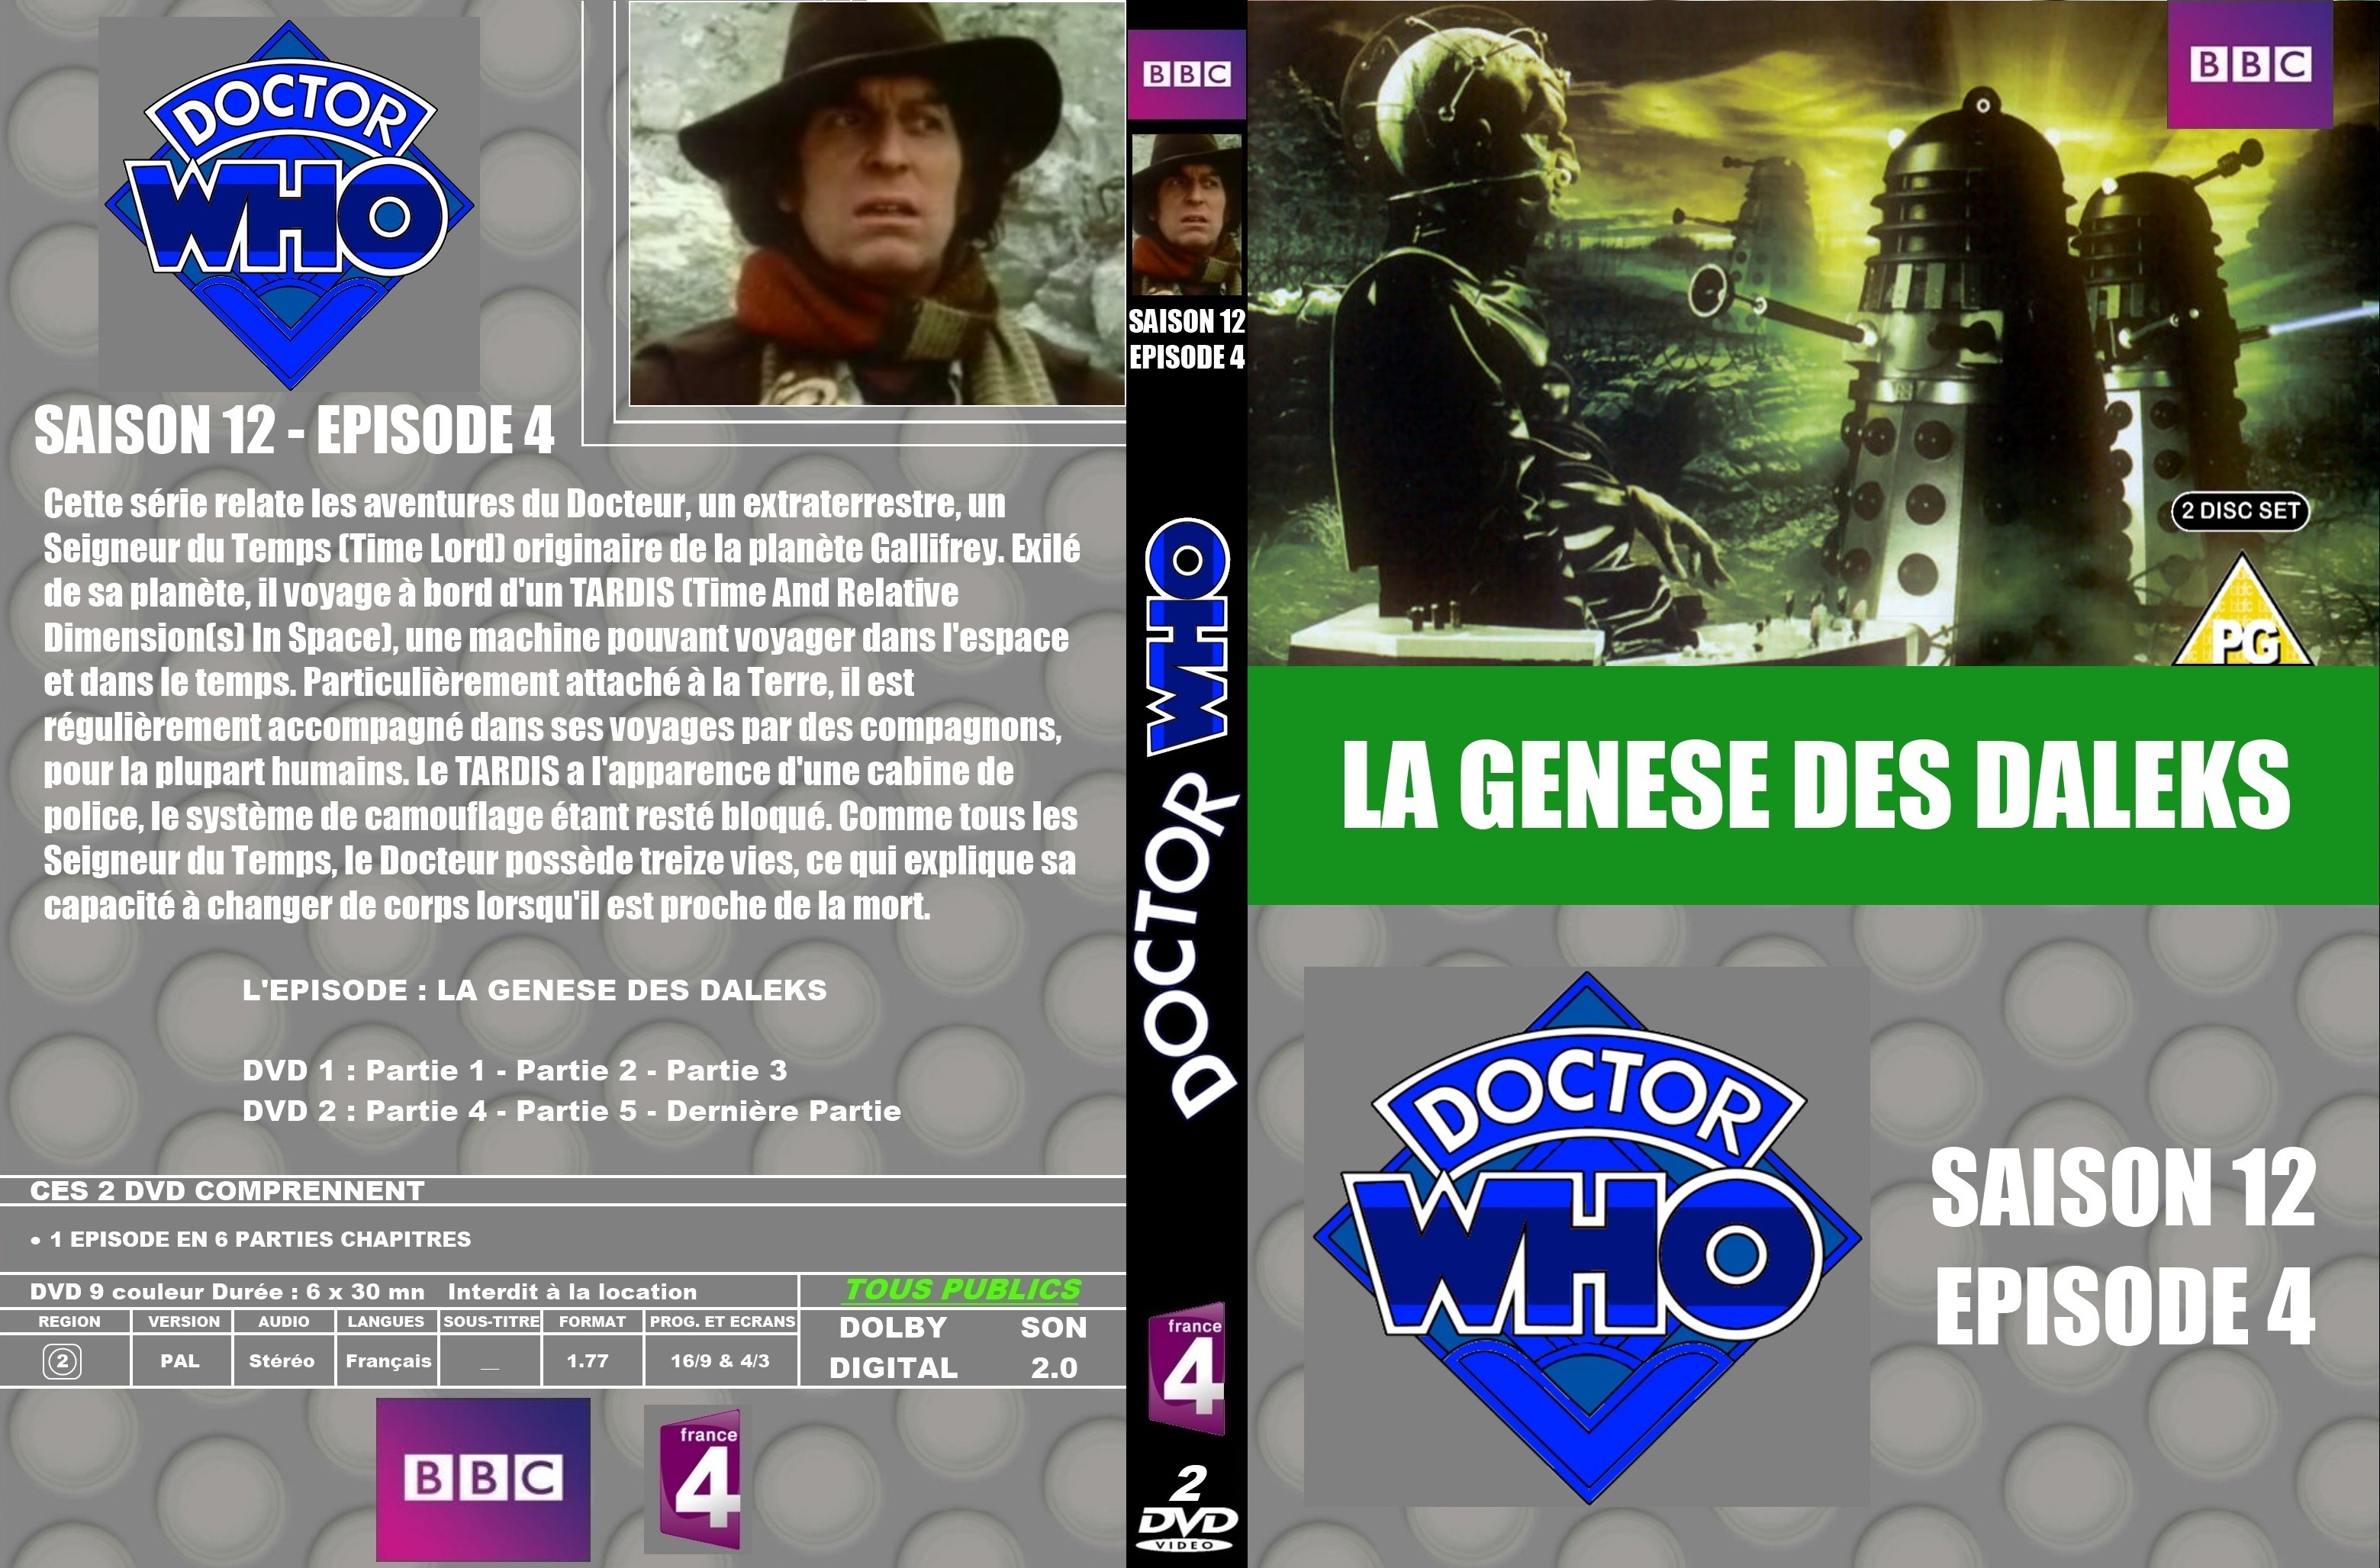 Jaquette DVD Doctor Who Classic Saison 12 pisode 4 custom